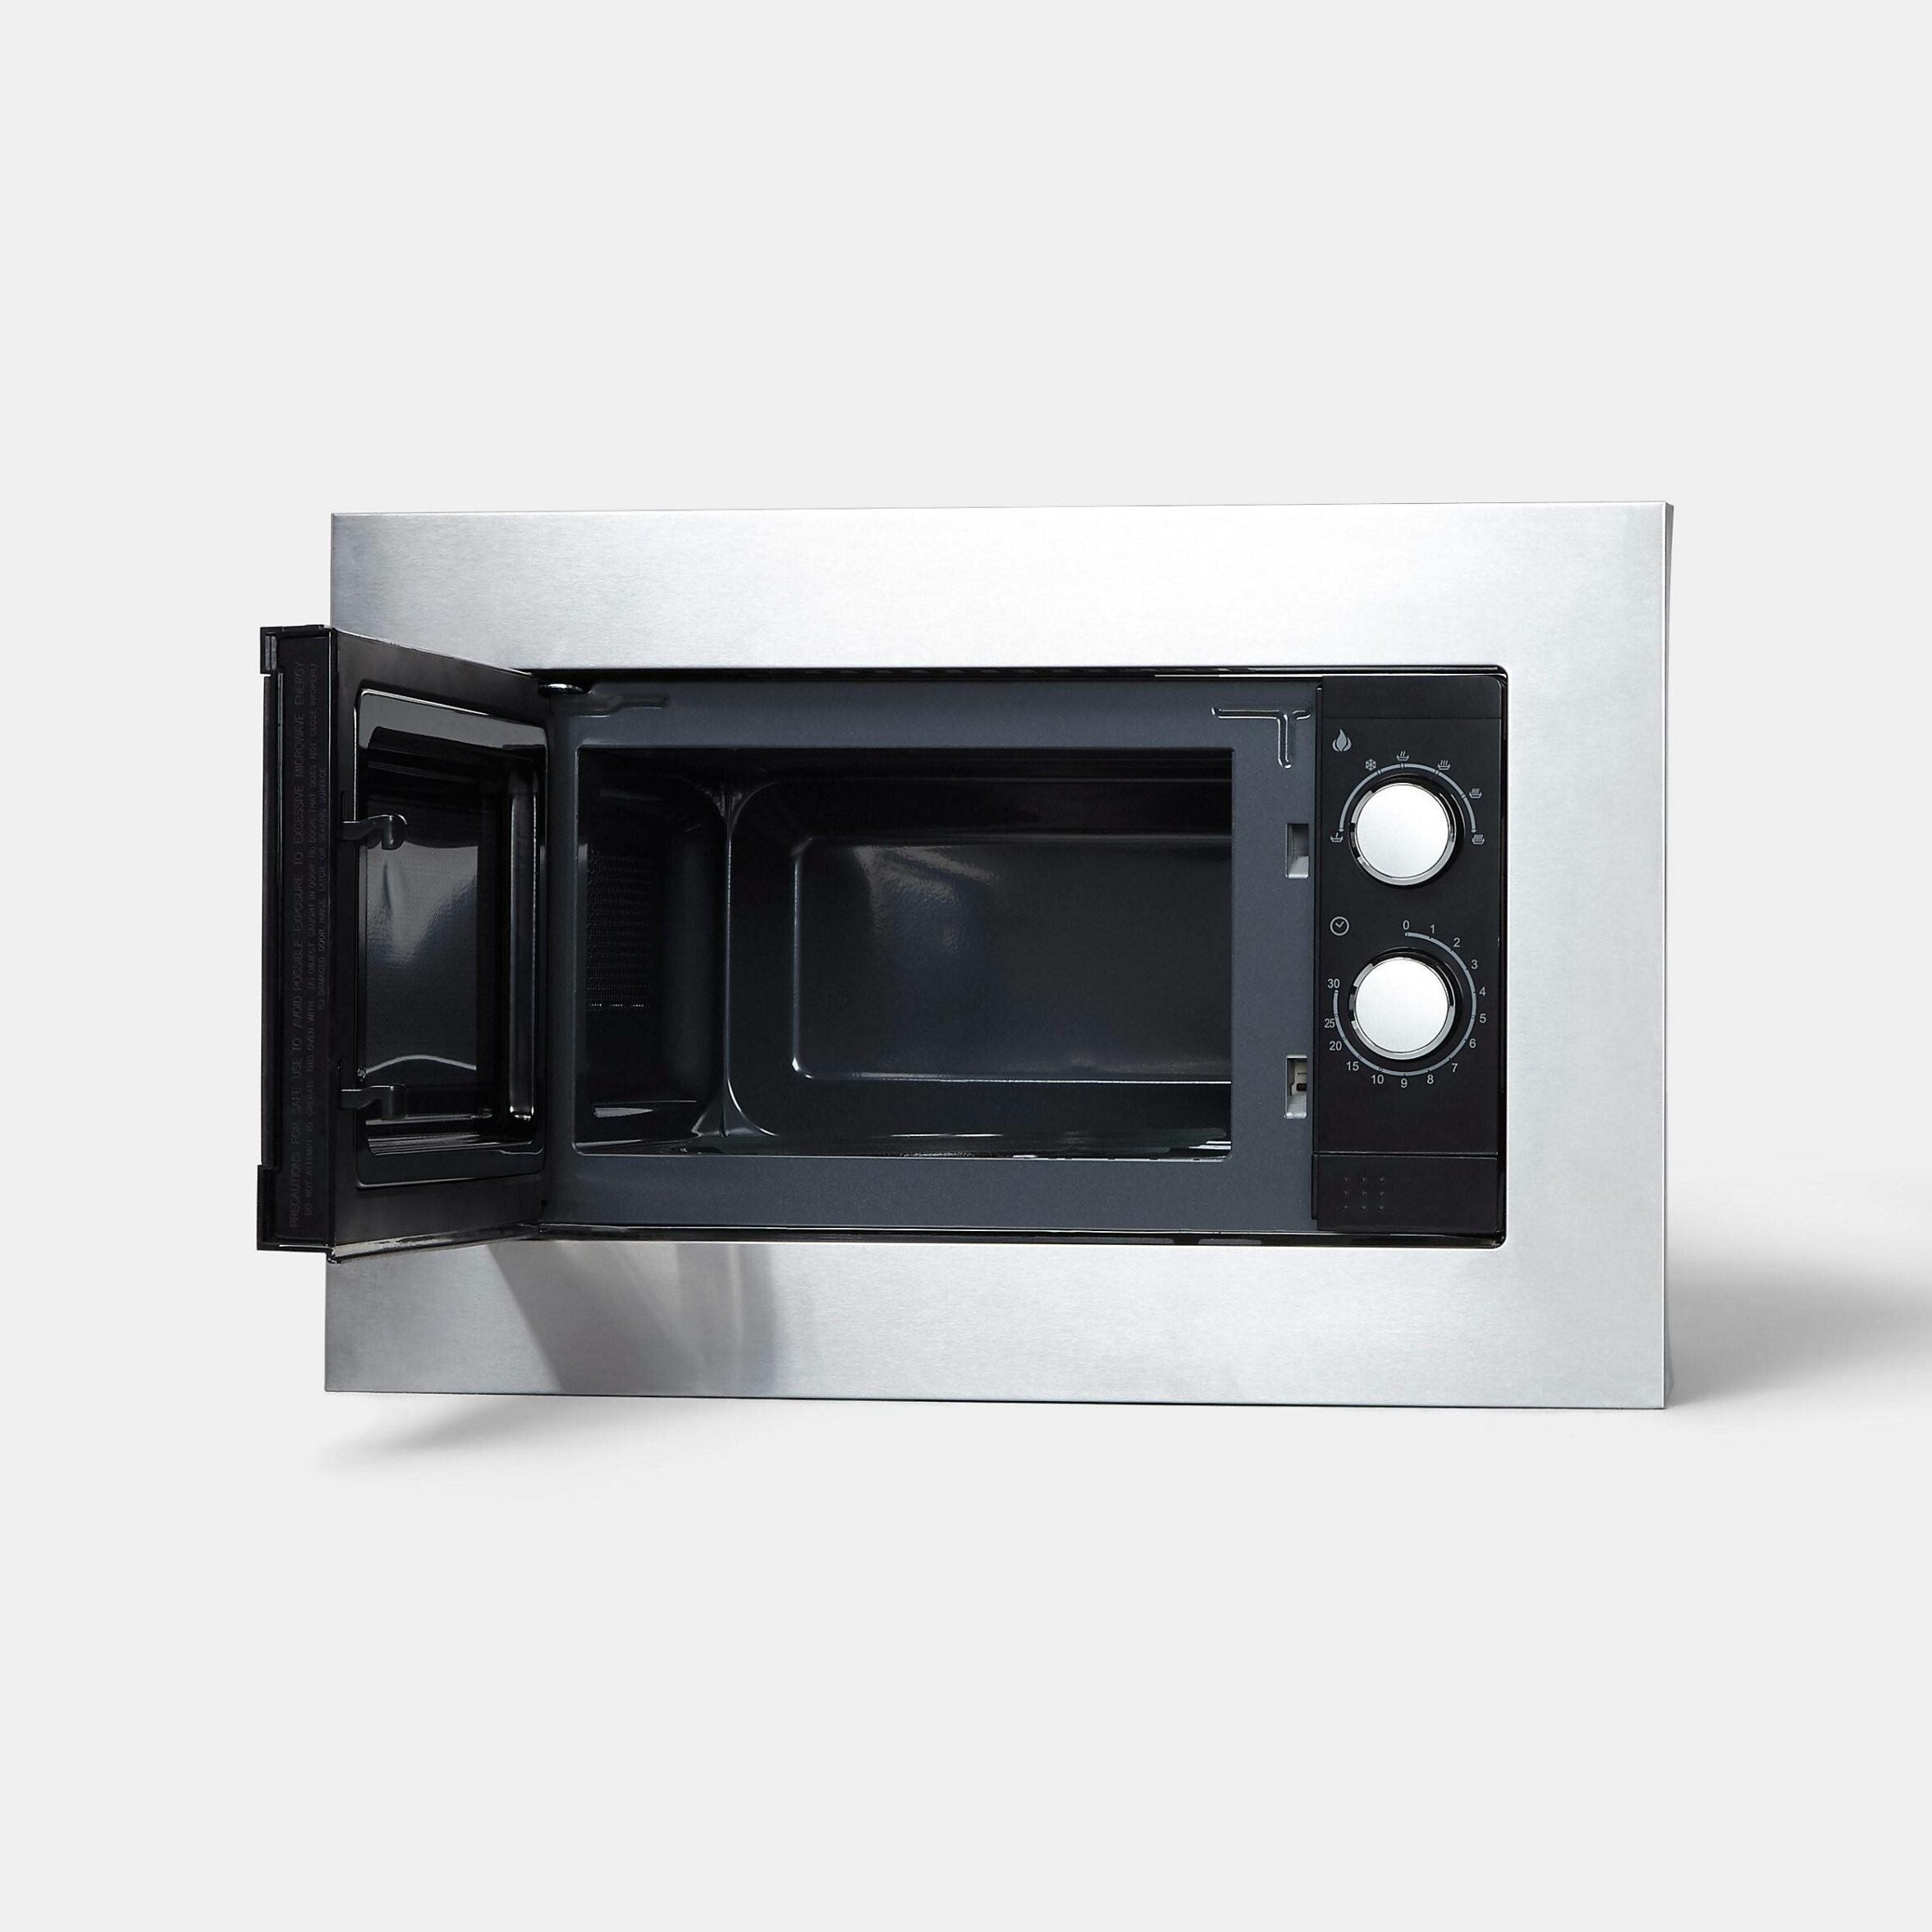 Cooke & Lewis - BIMW20LUK 20L Built-in Microwave - Matt black